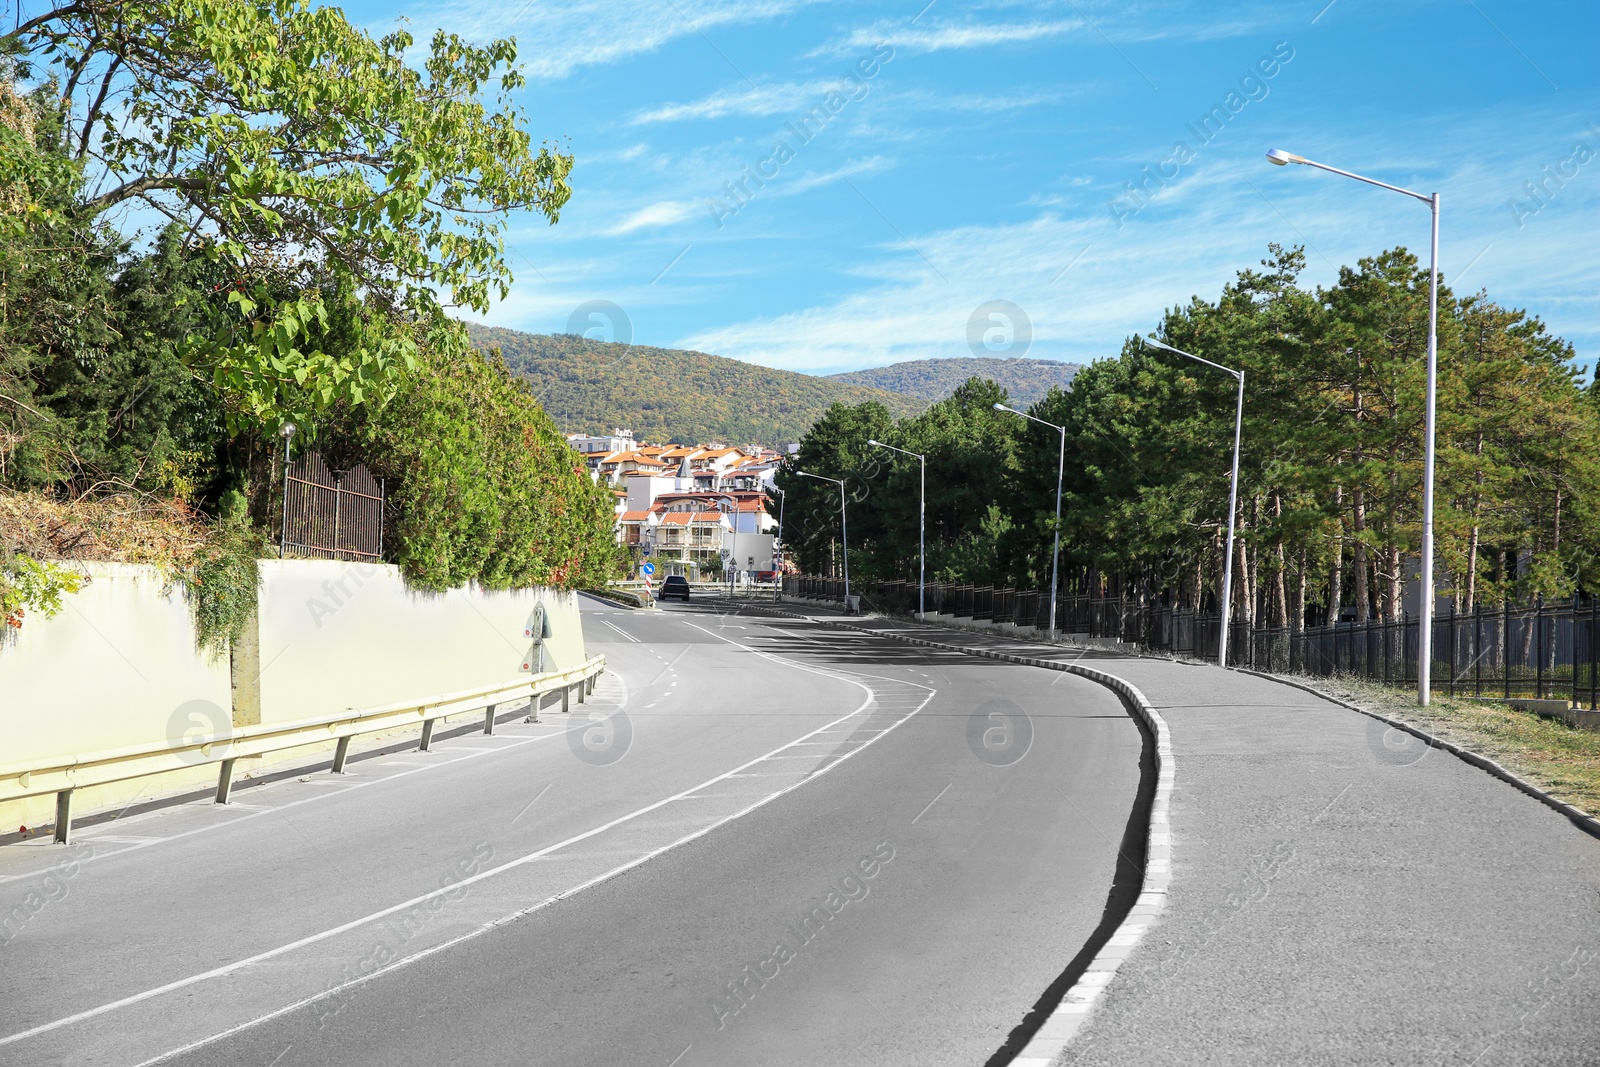 Photo of View of empty asphalt road on city street